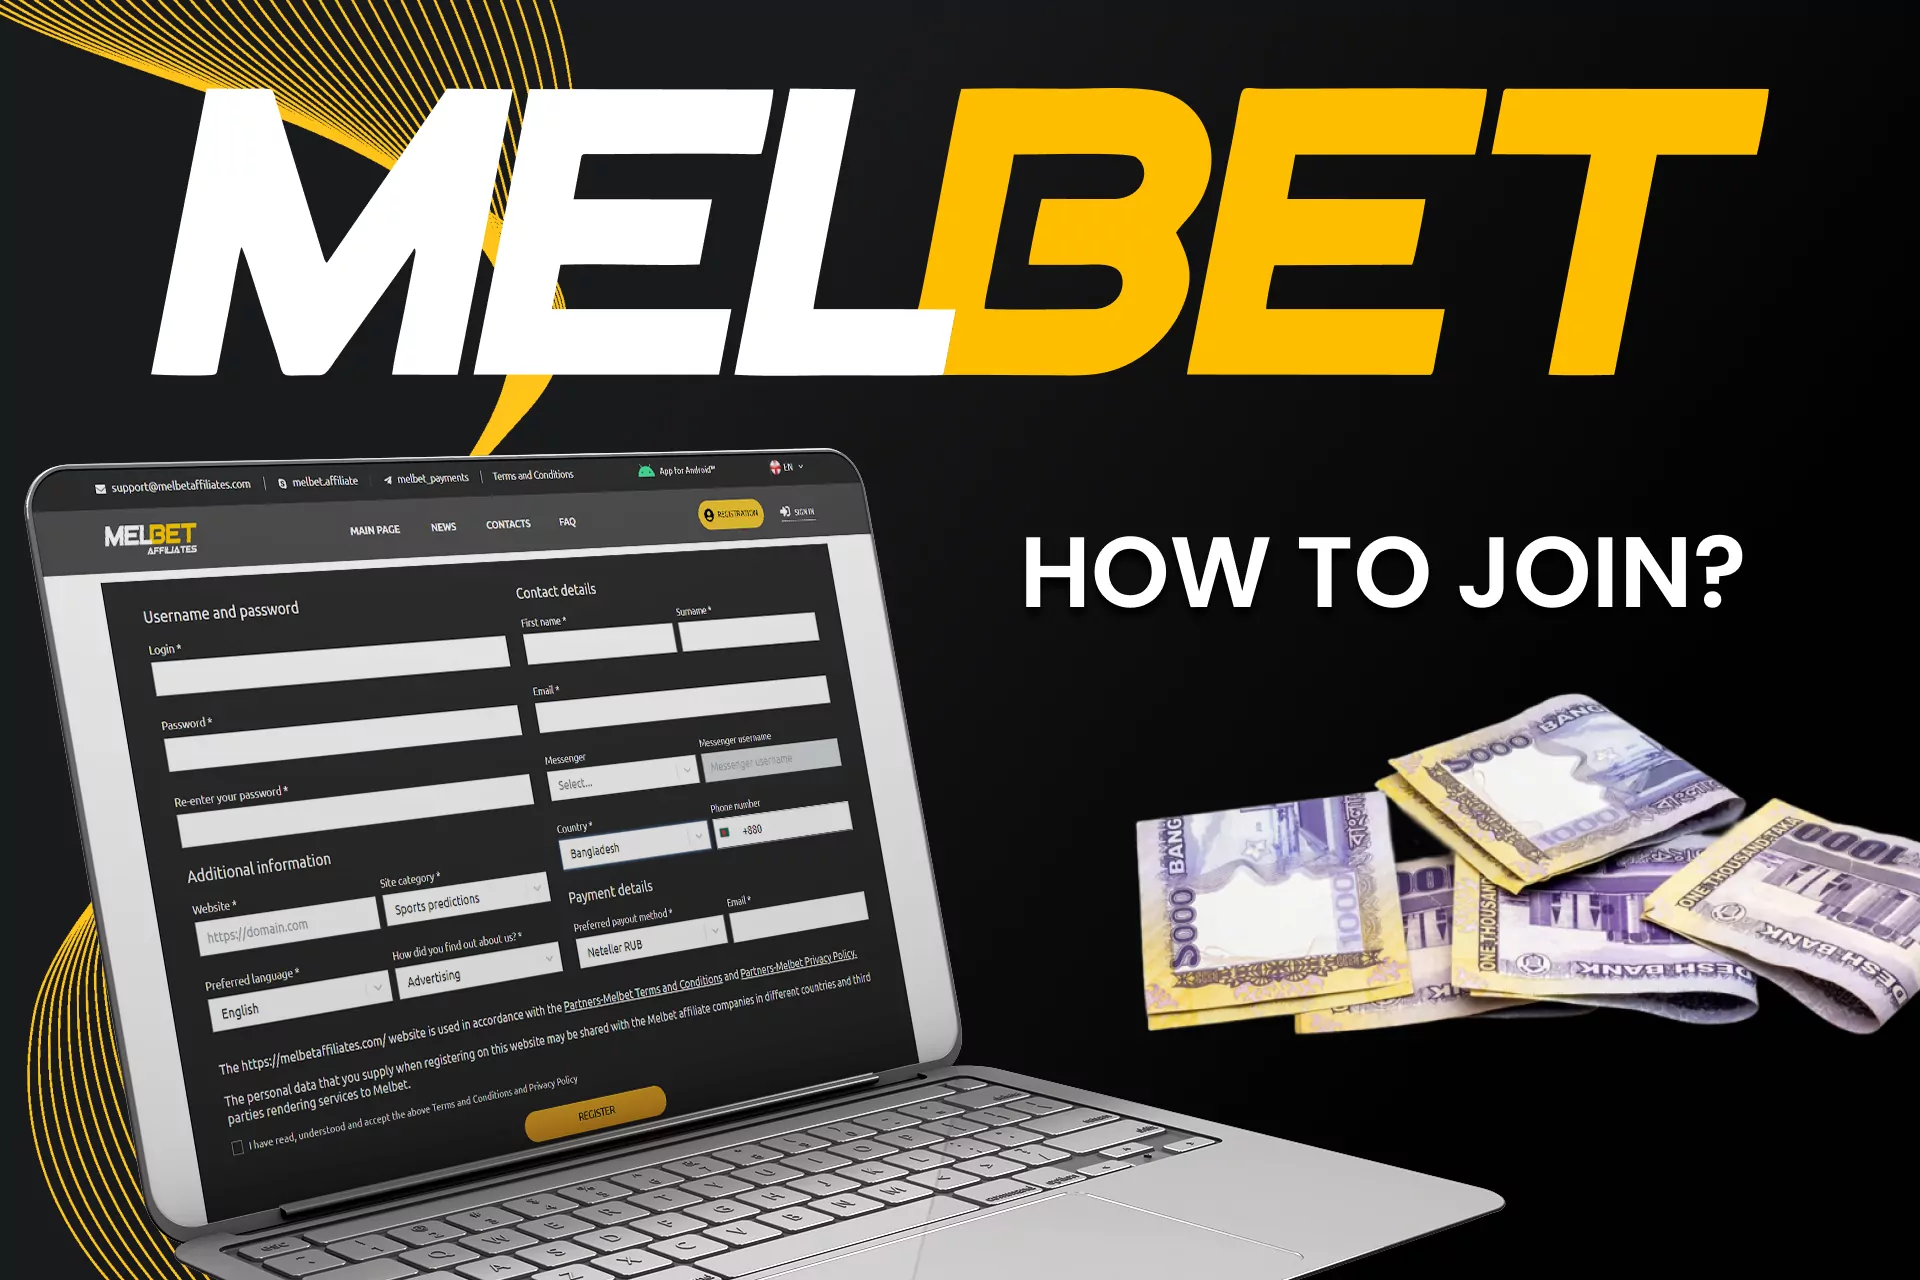 Sign up for a special bonus program from Melbet.